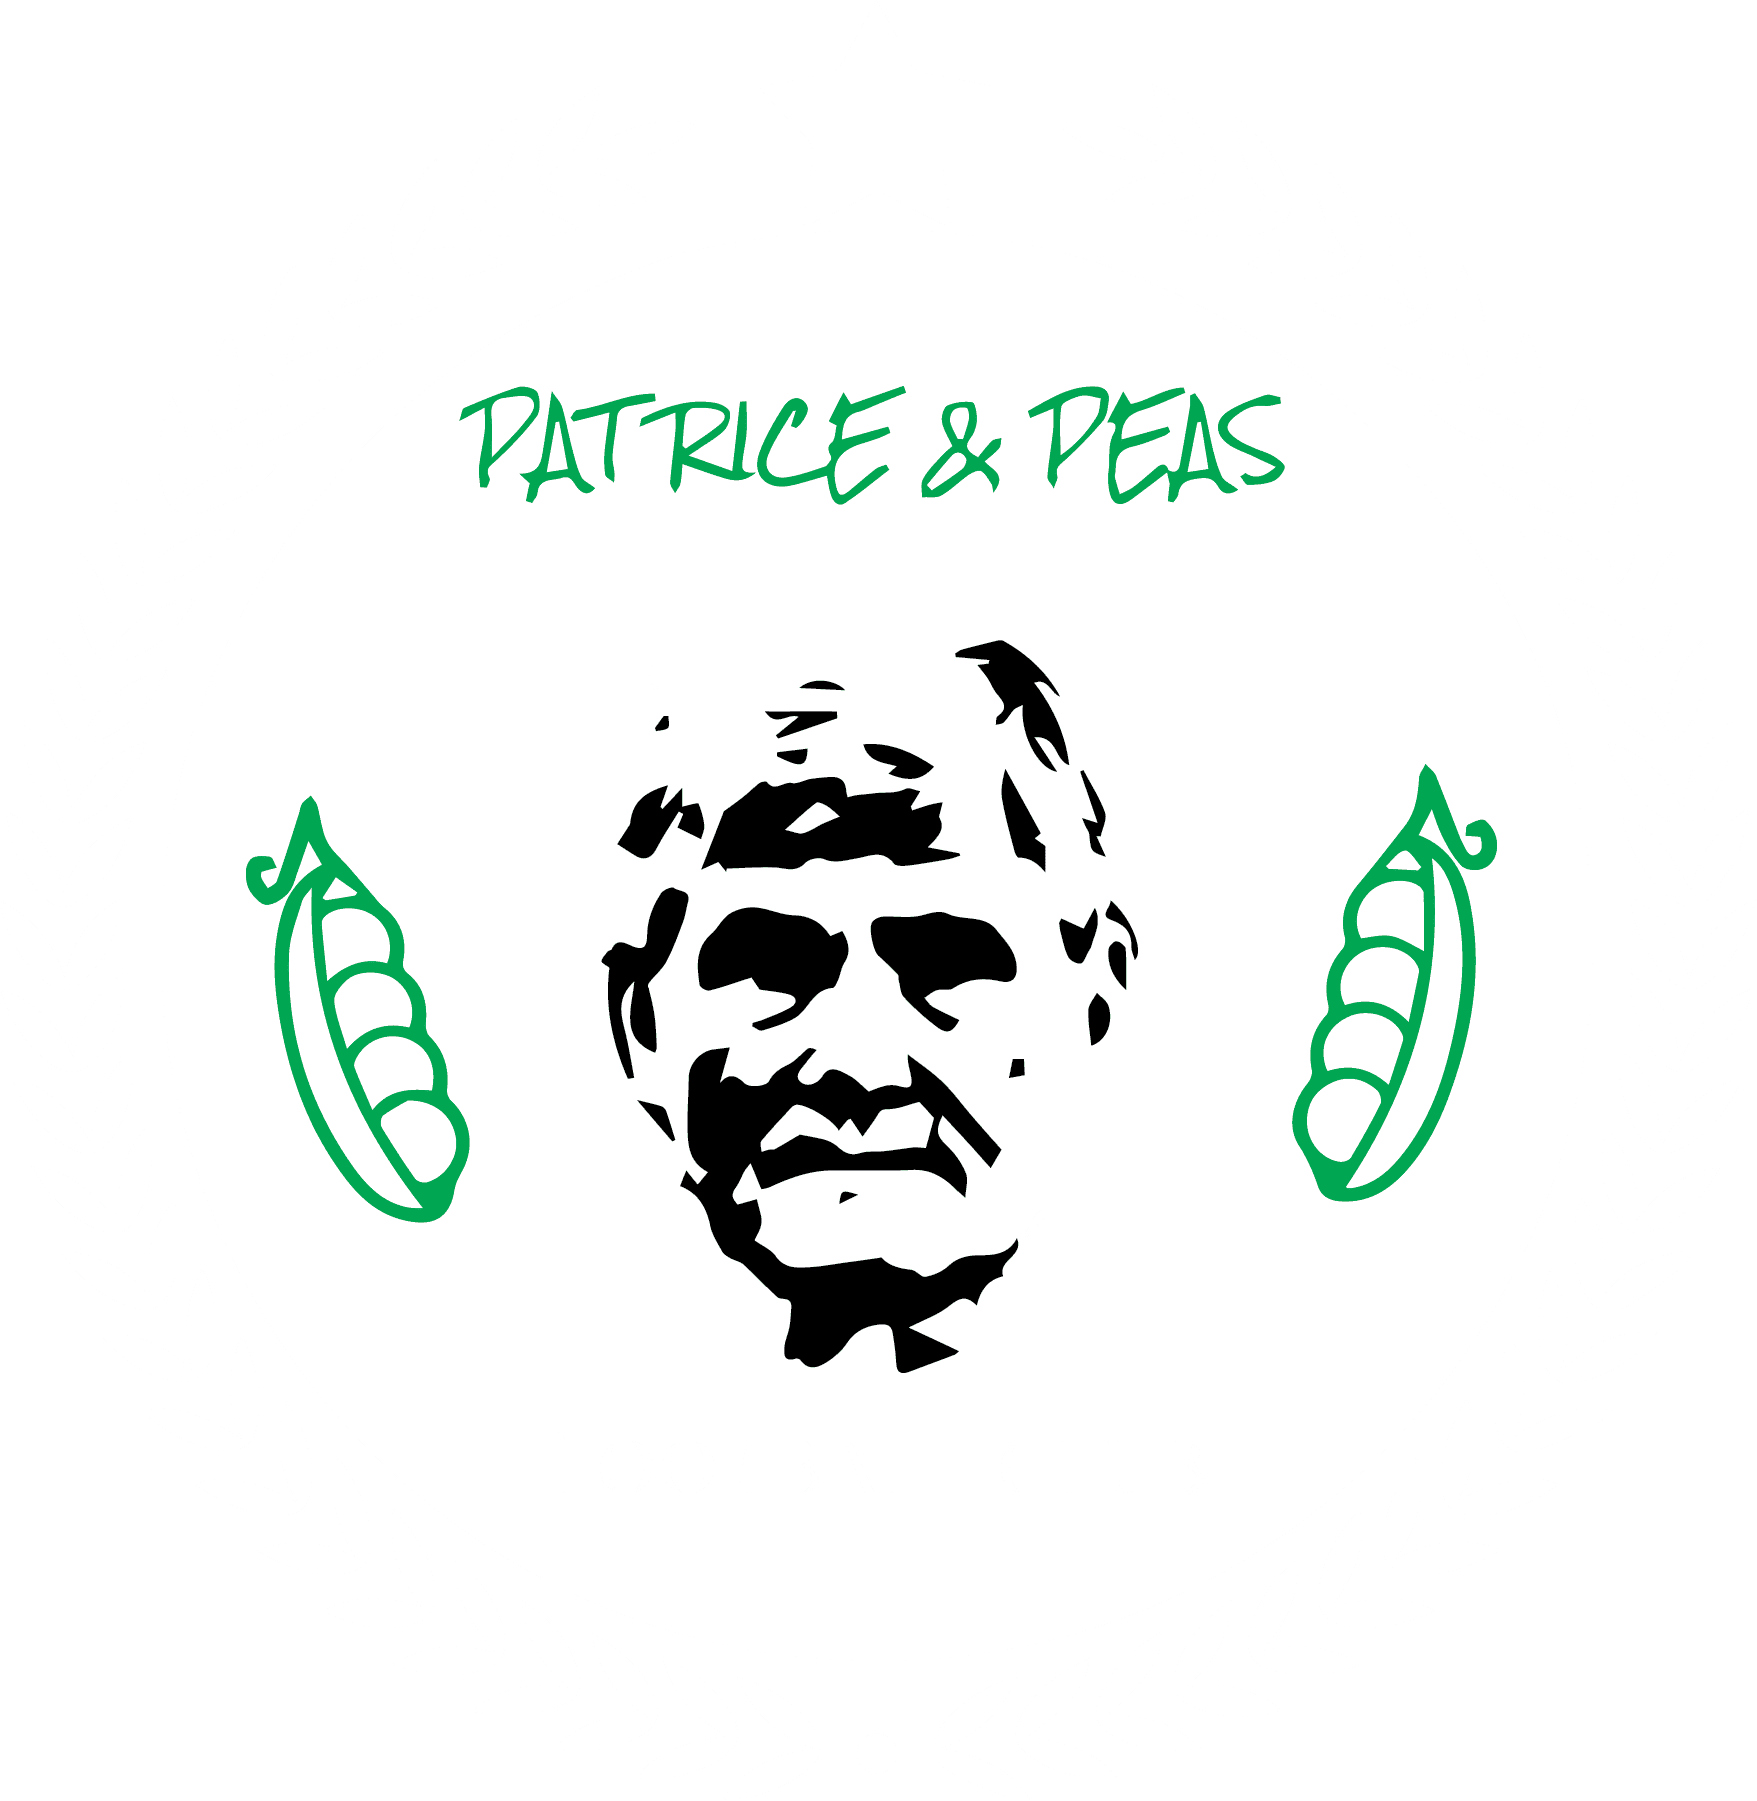 Pat Rice & Peas Football Club